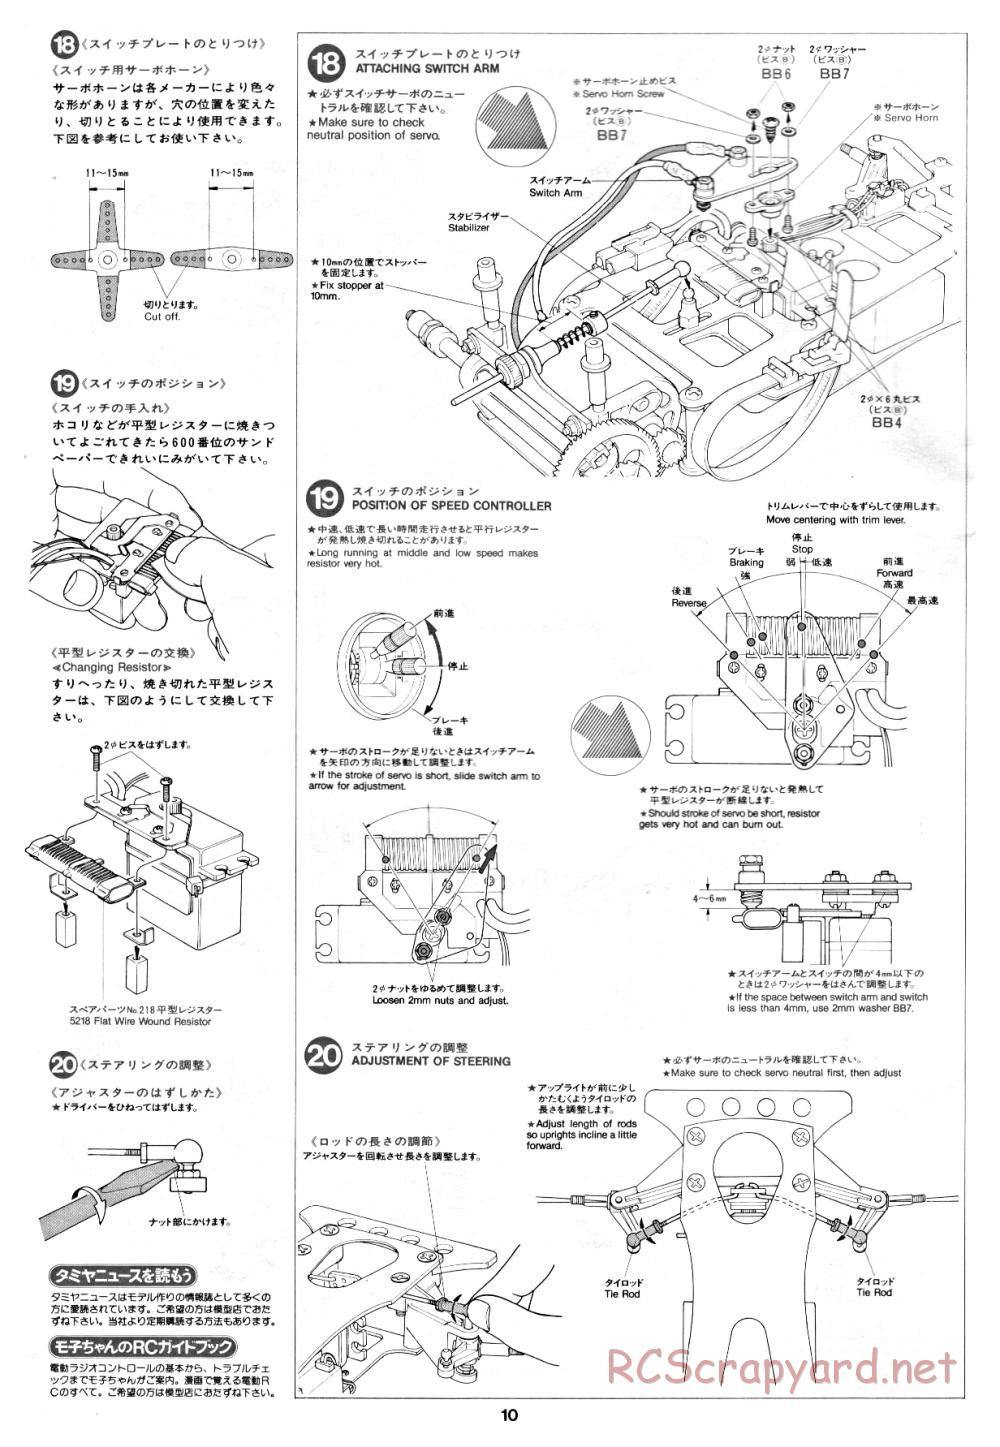 Tamiya - Toyota Tom's 84C - RM MK.6 - 58049 - Manual - Page 10